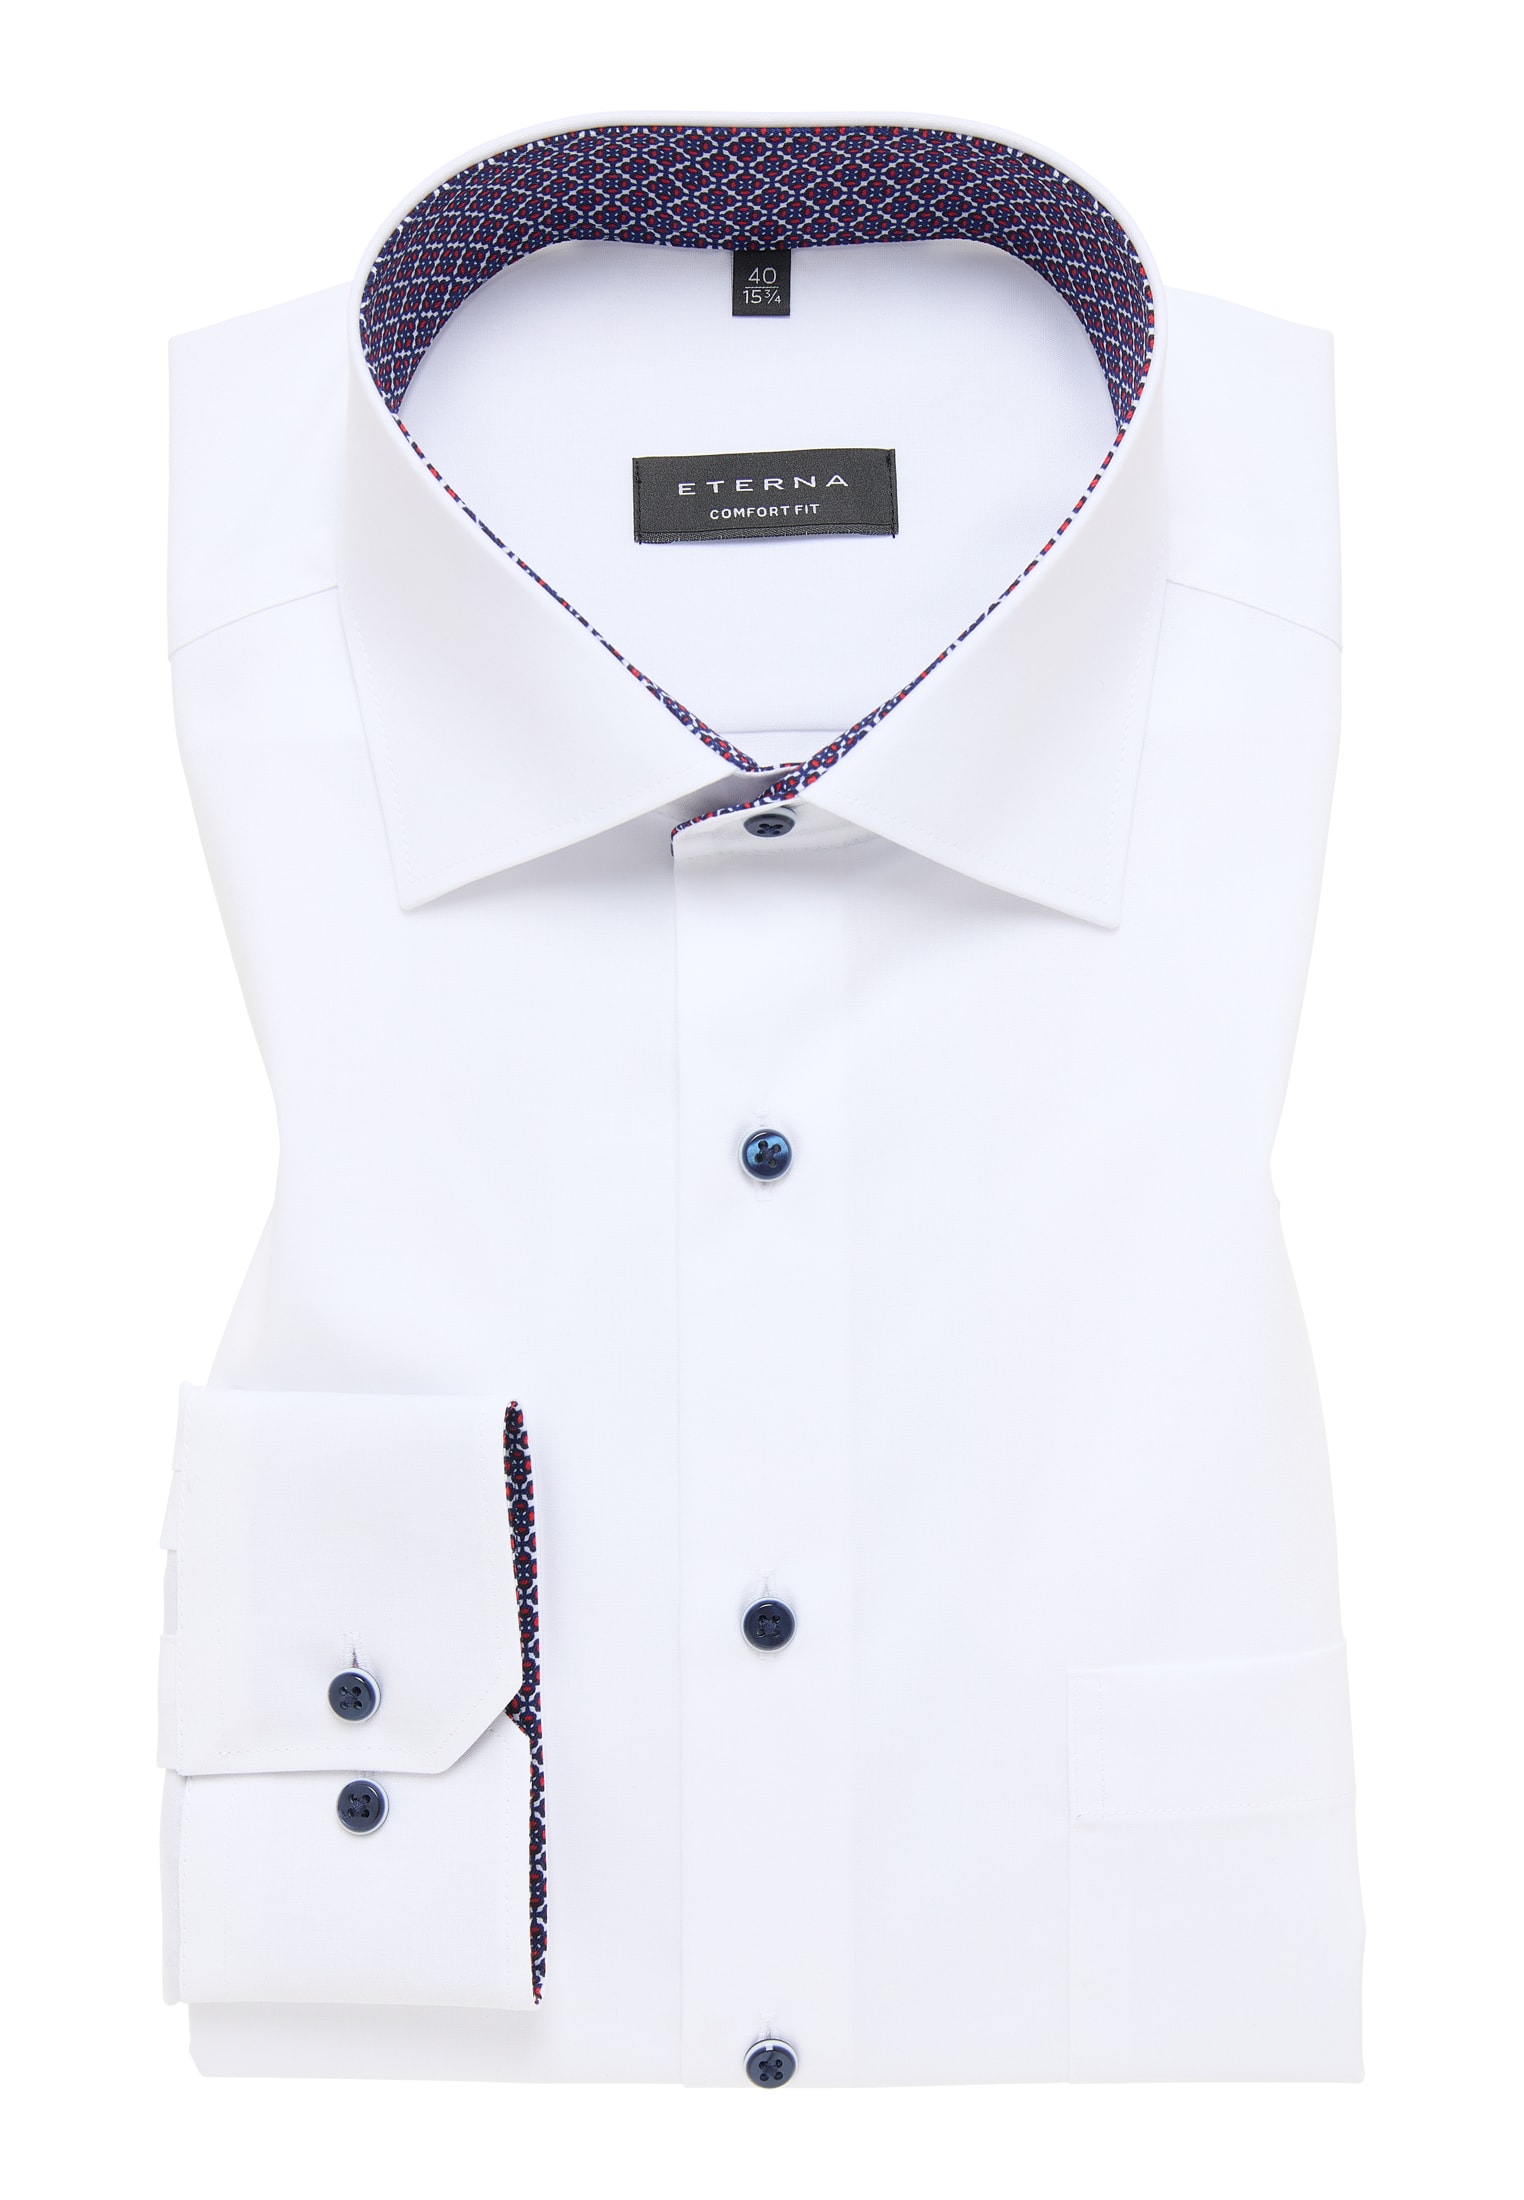 COMFORT FIT Original Shirt sleeve white in | | long 1SH11720-00-01-46-1/1 plain | 46 white 